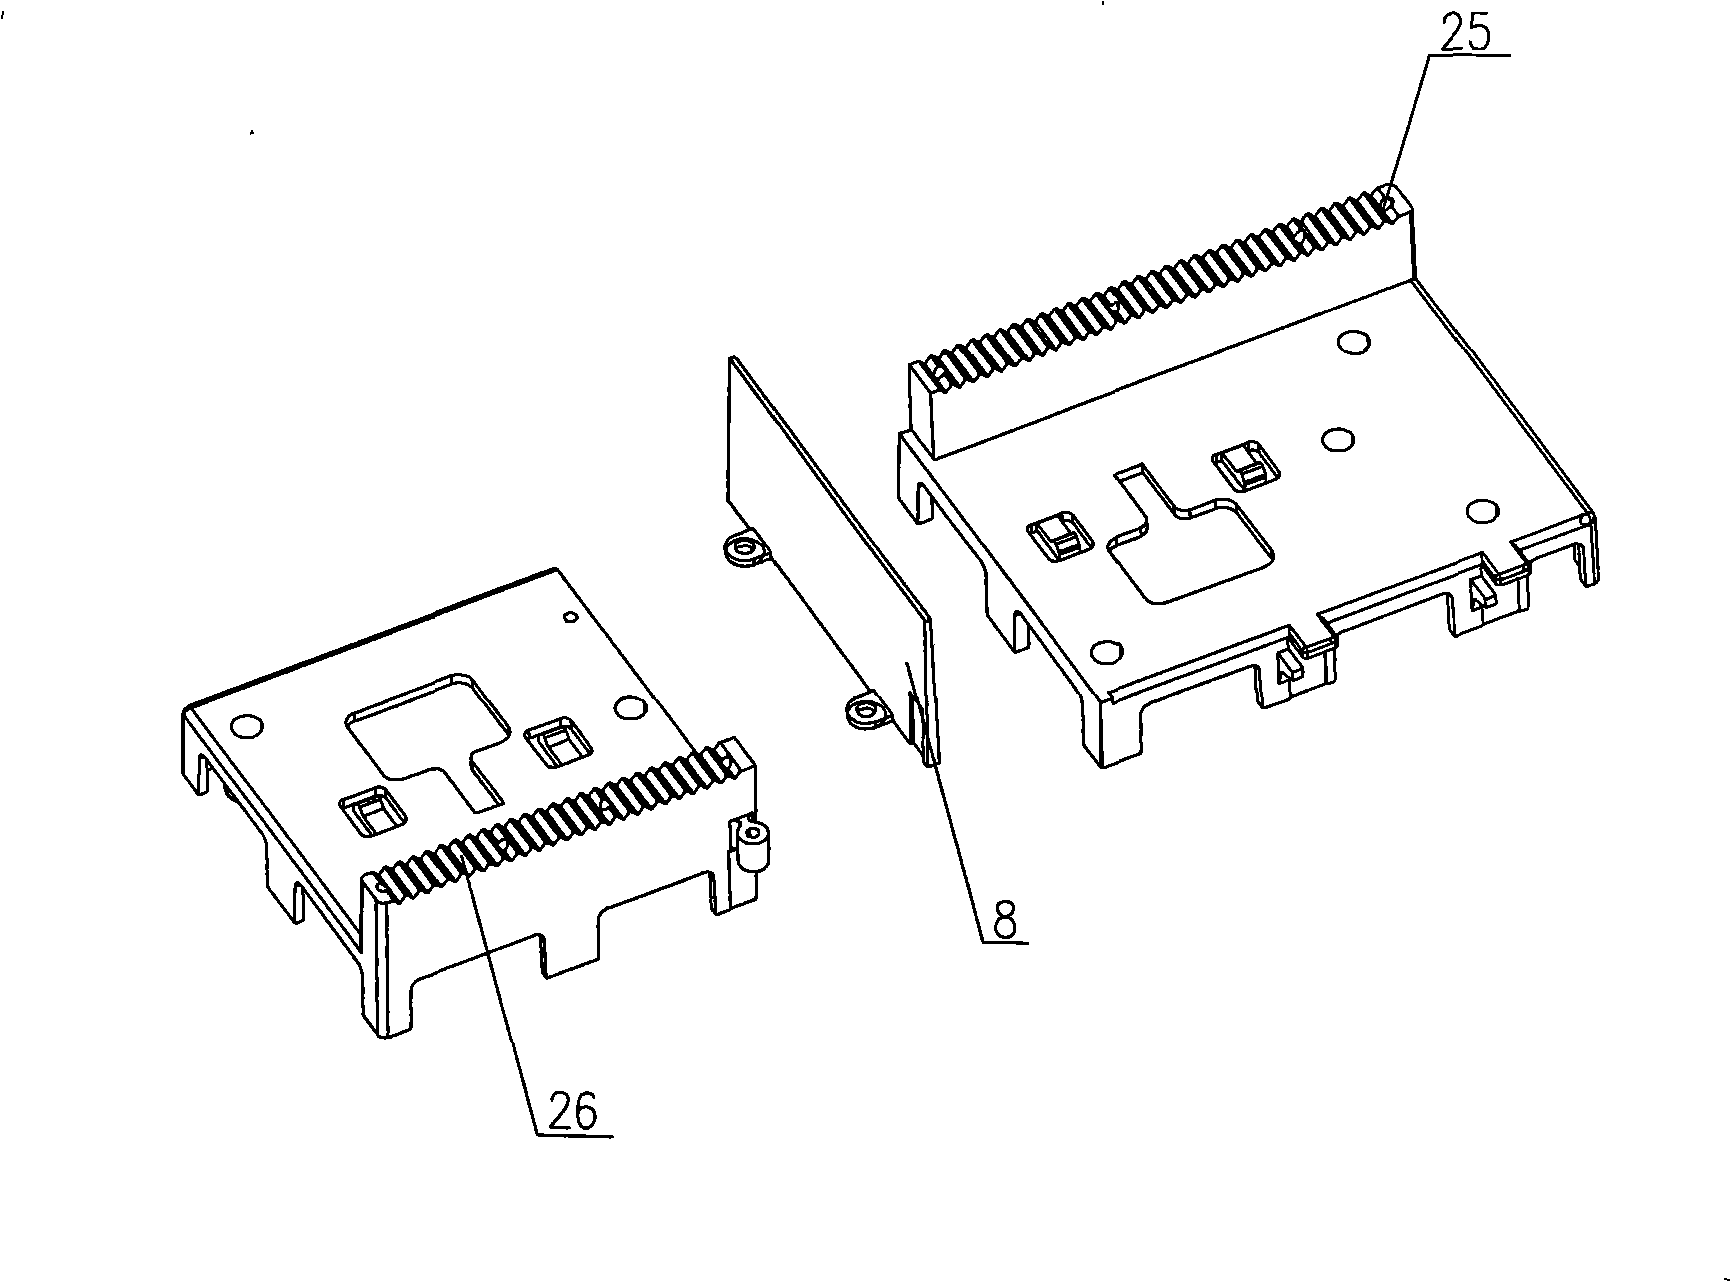 Voltameter box